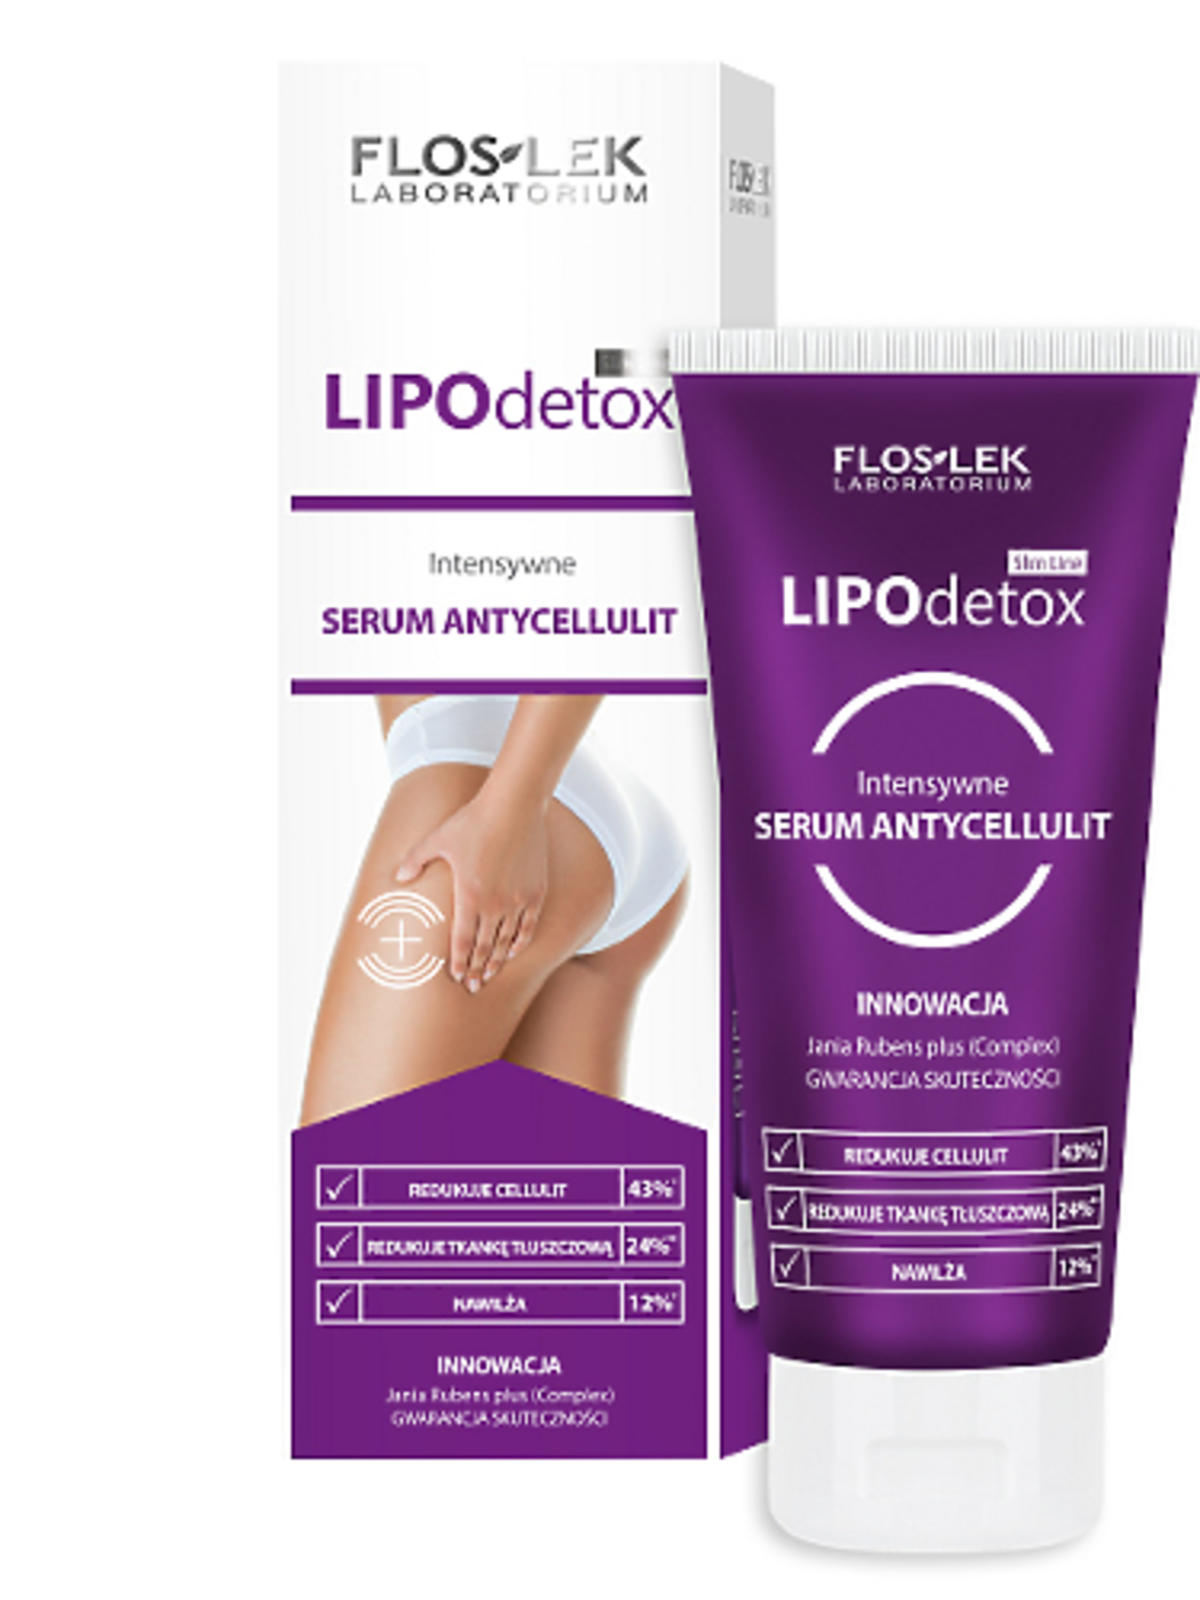 Intensywne serum antycellulit Slim Line Lipo detox Floslek, 45,99zł